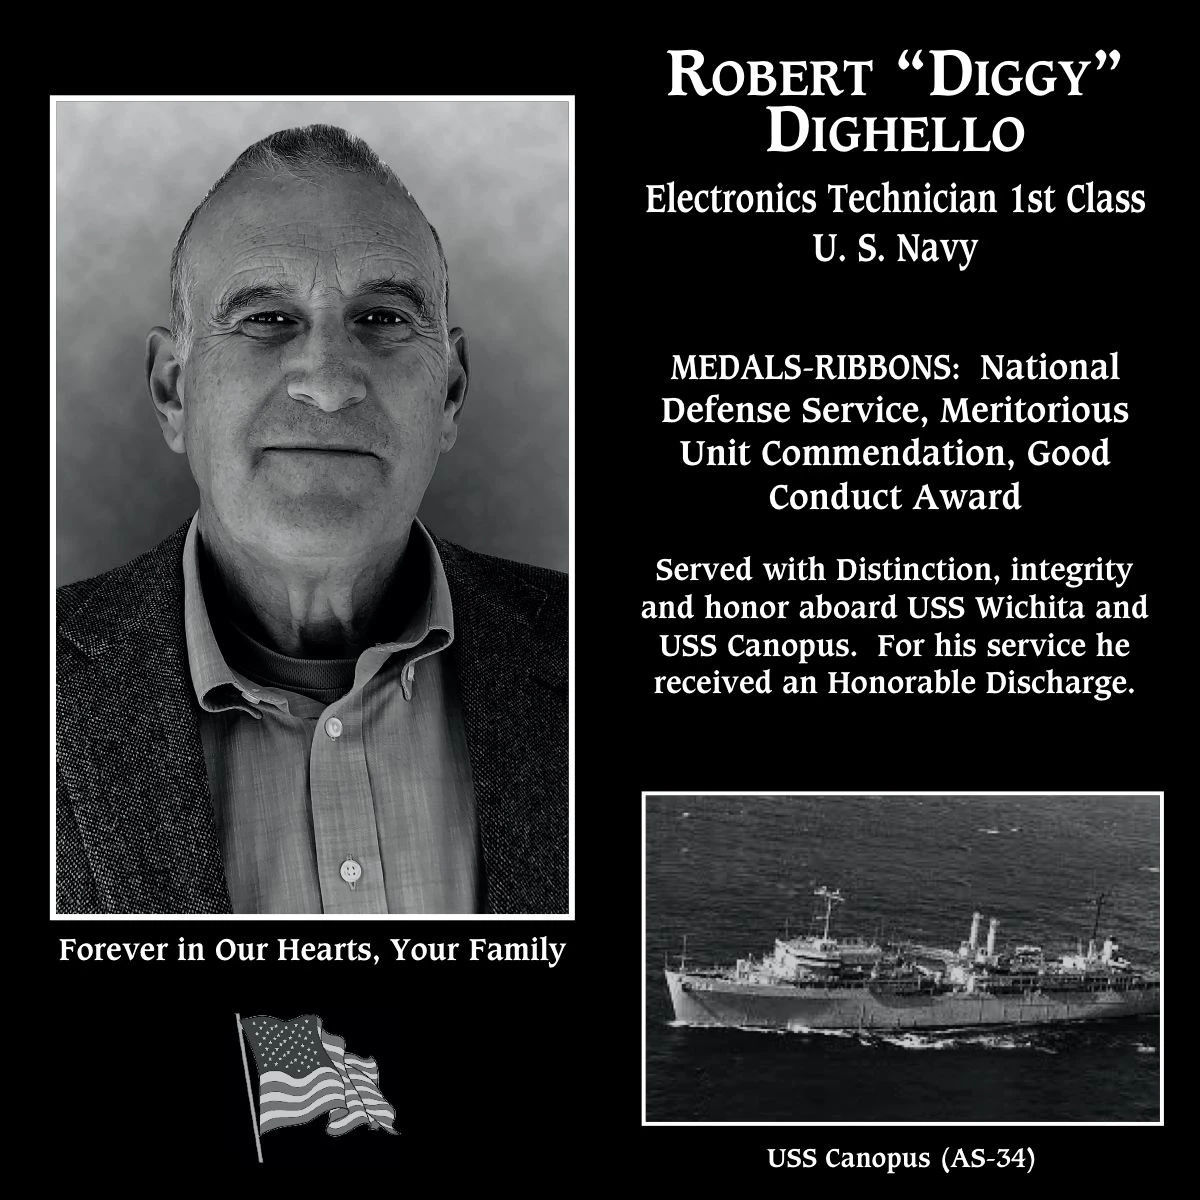 Robert "Diggy" Dighello